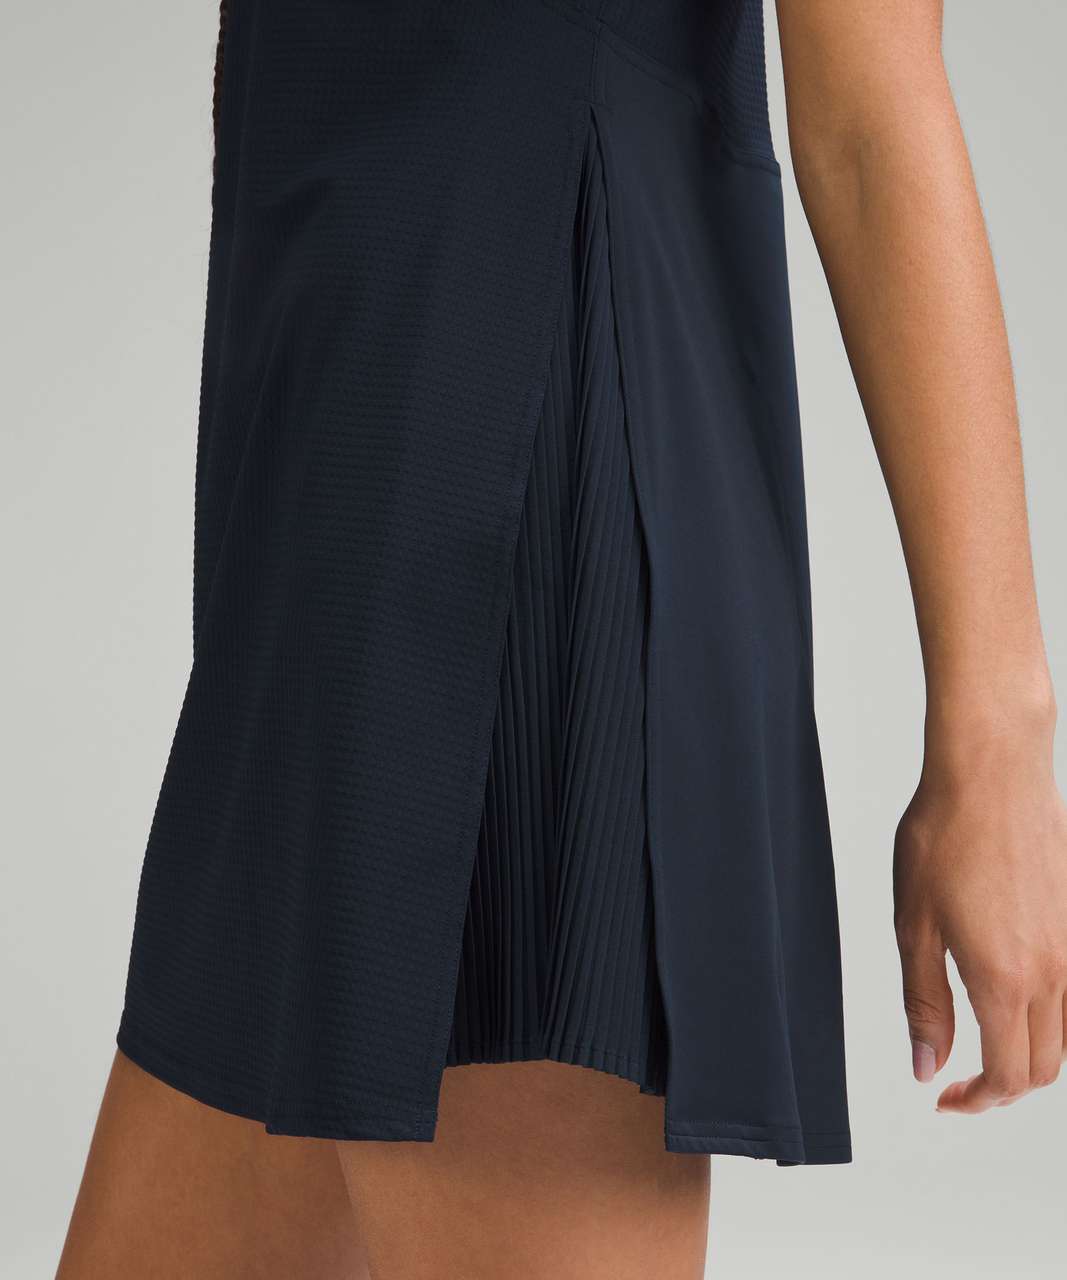 Lululemon Grid-Texture Sleeveless Tennis Dress - True Navy